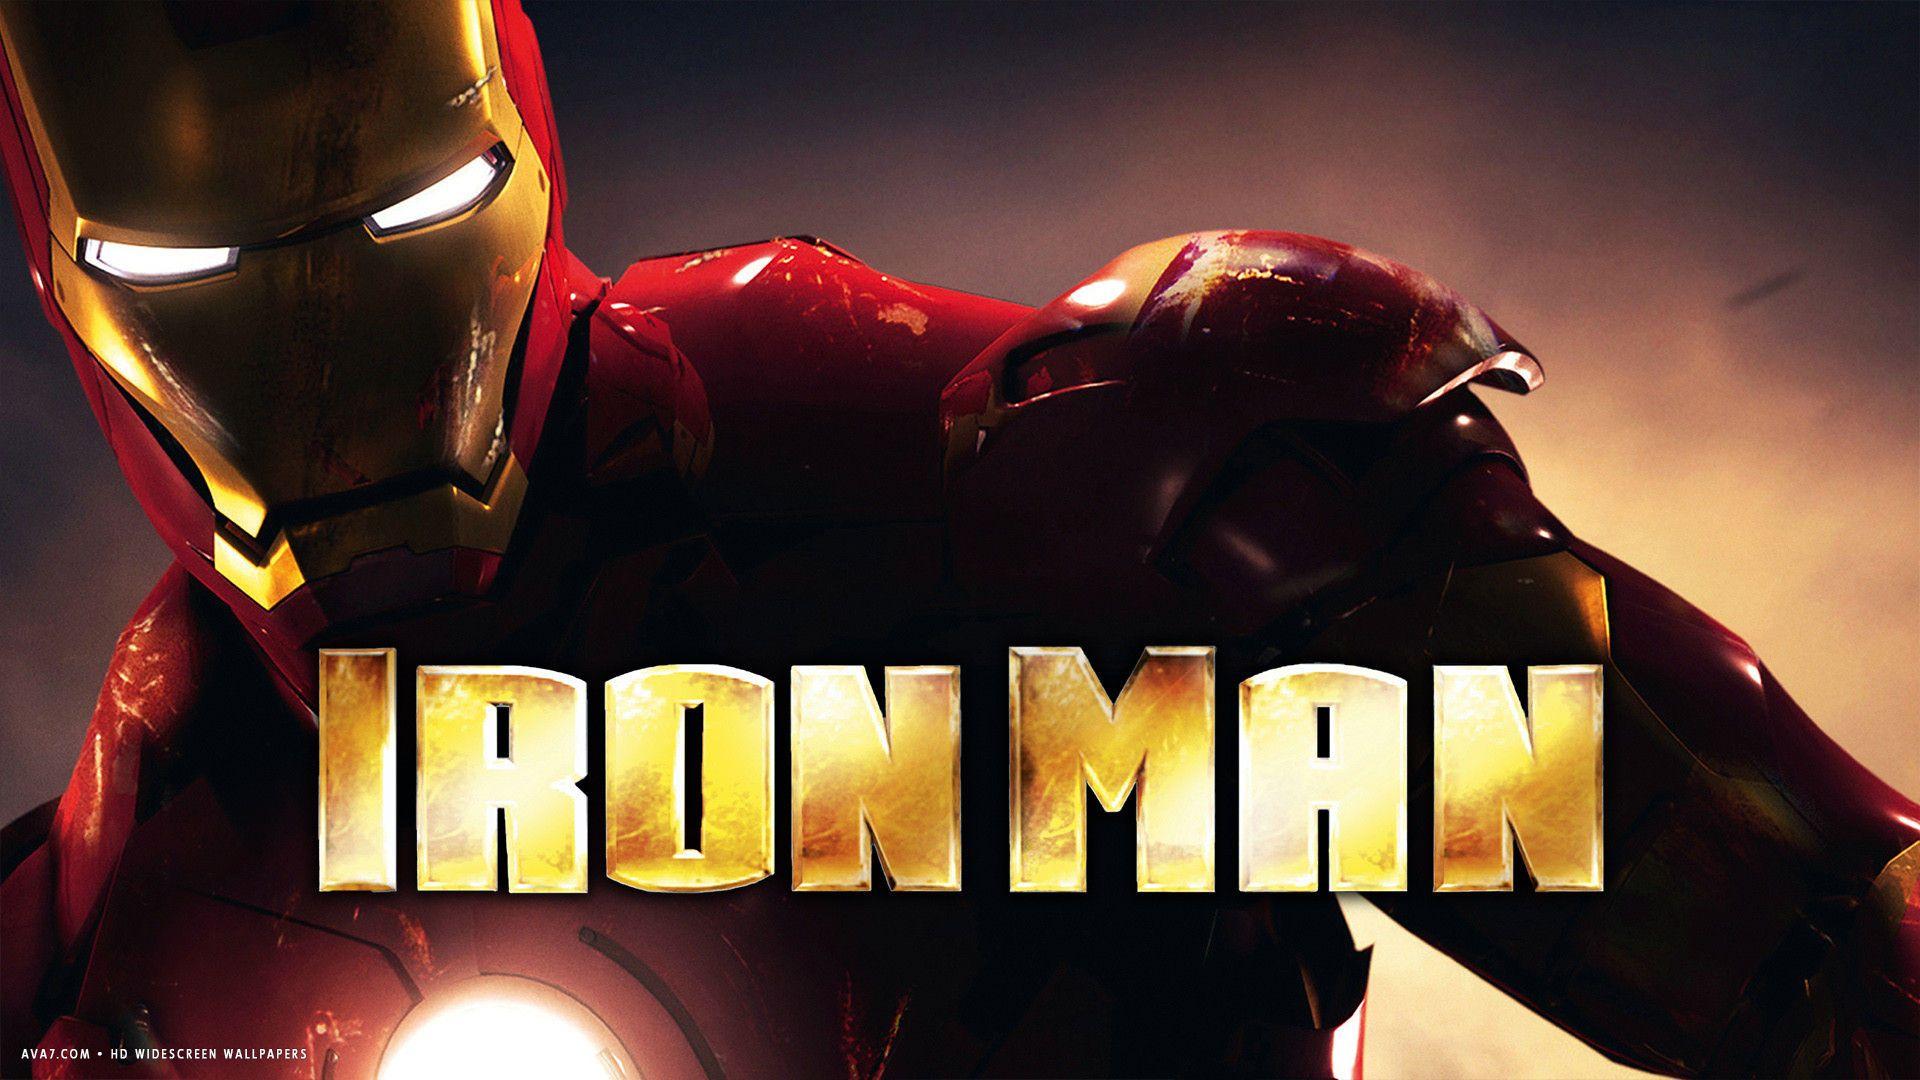 iron man movie poster